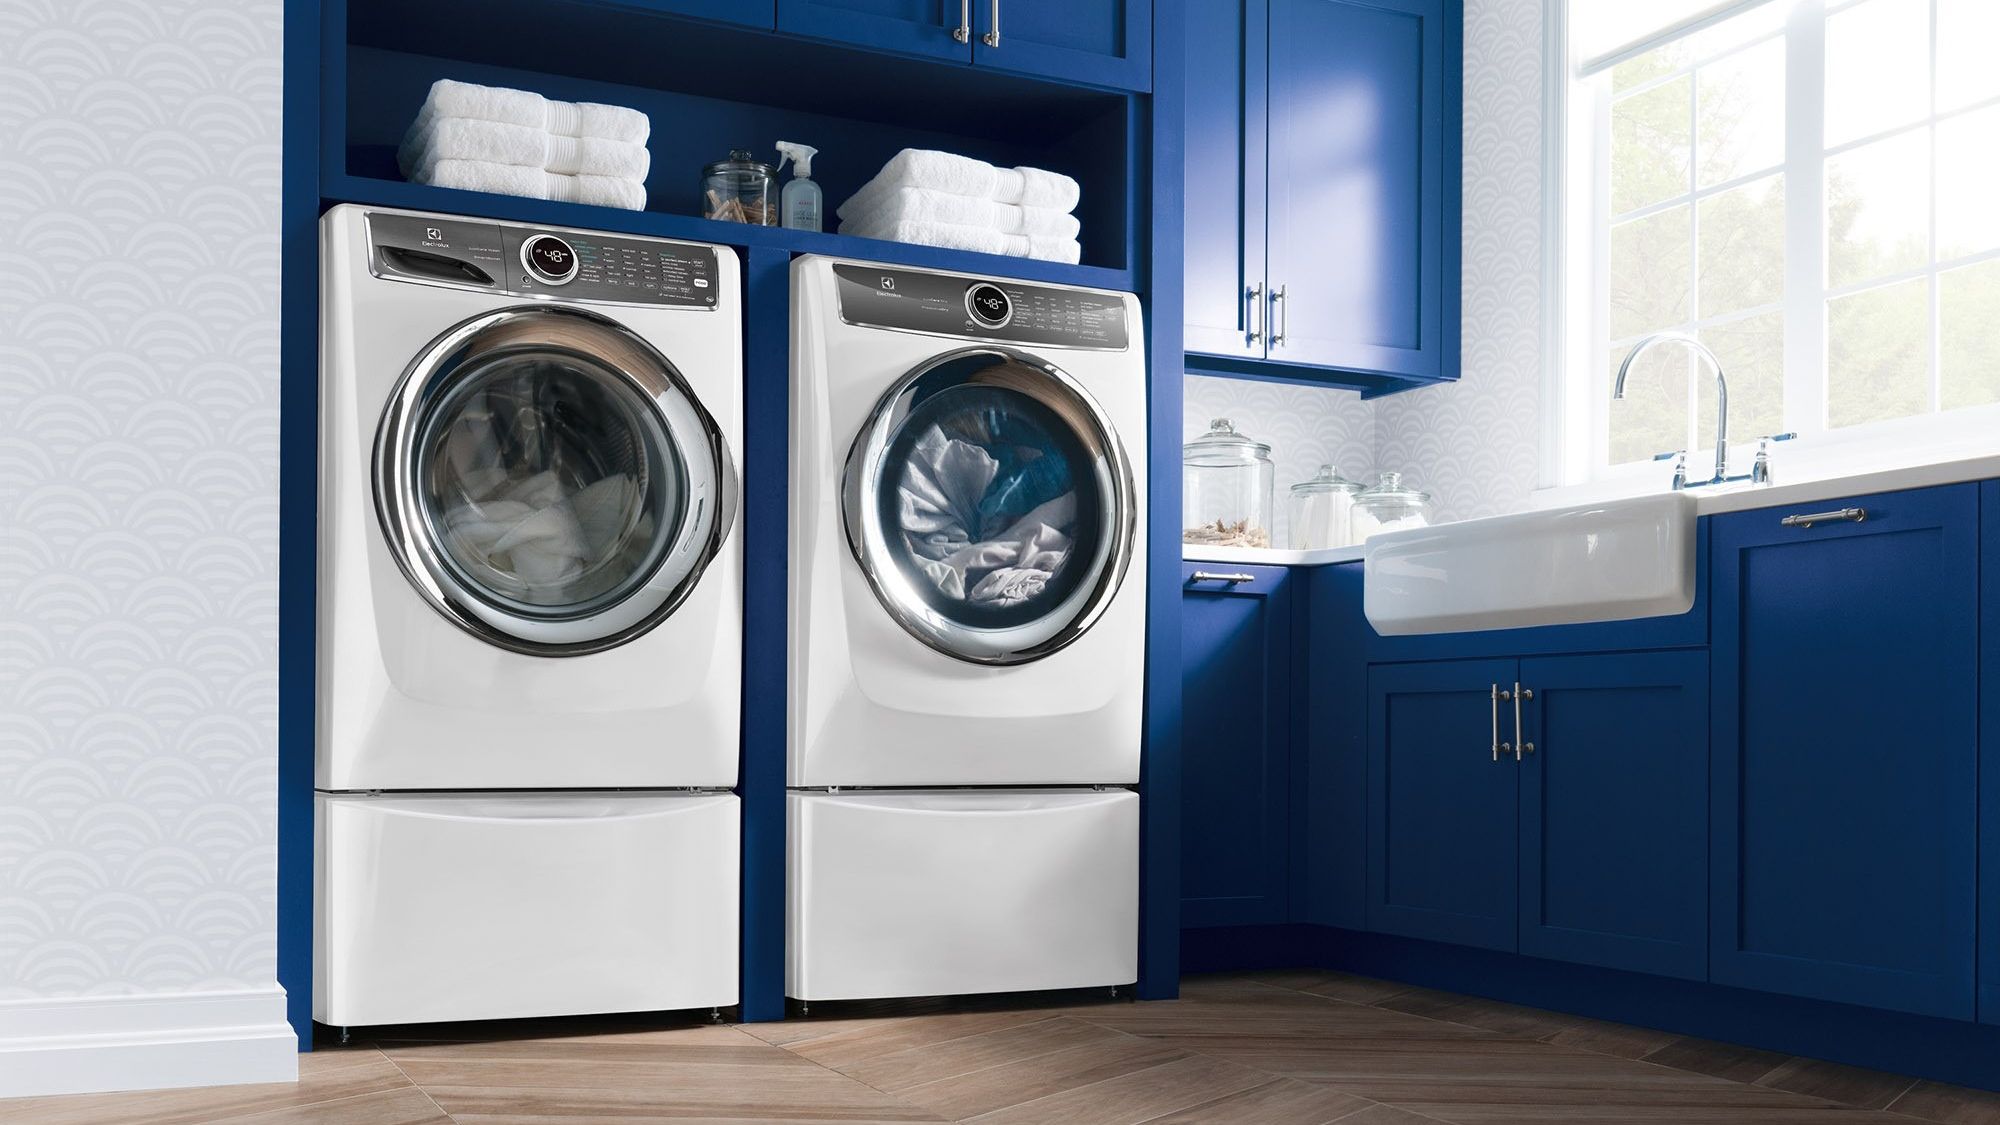 11 Best Washing Machines To Buy In 2021 Washing Machine Reviews